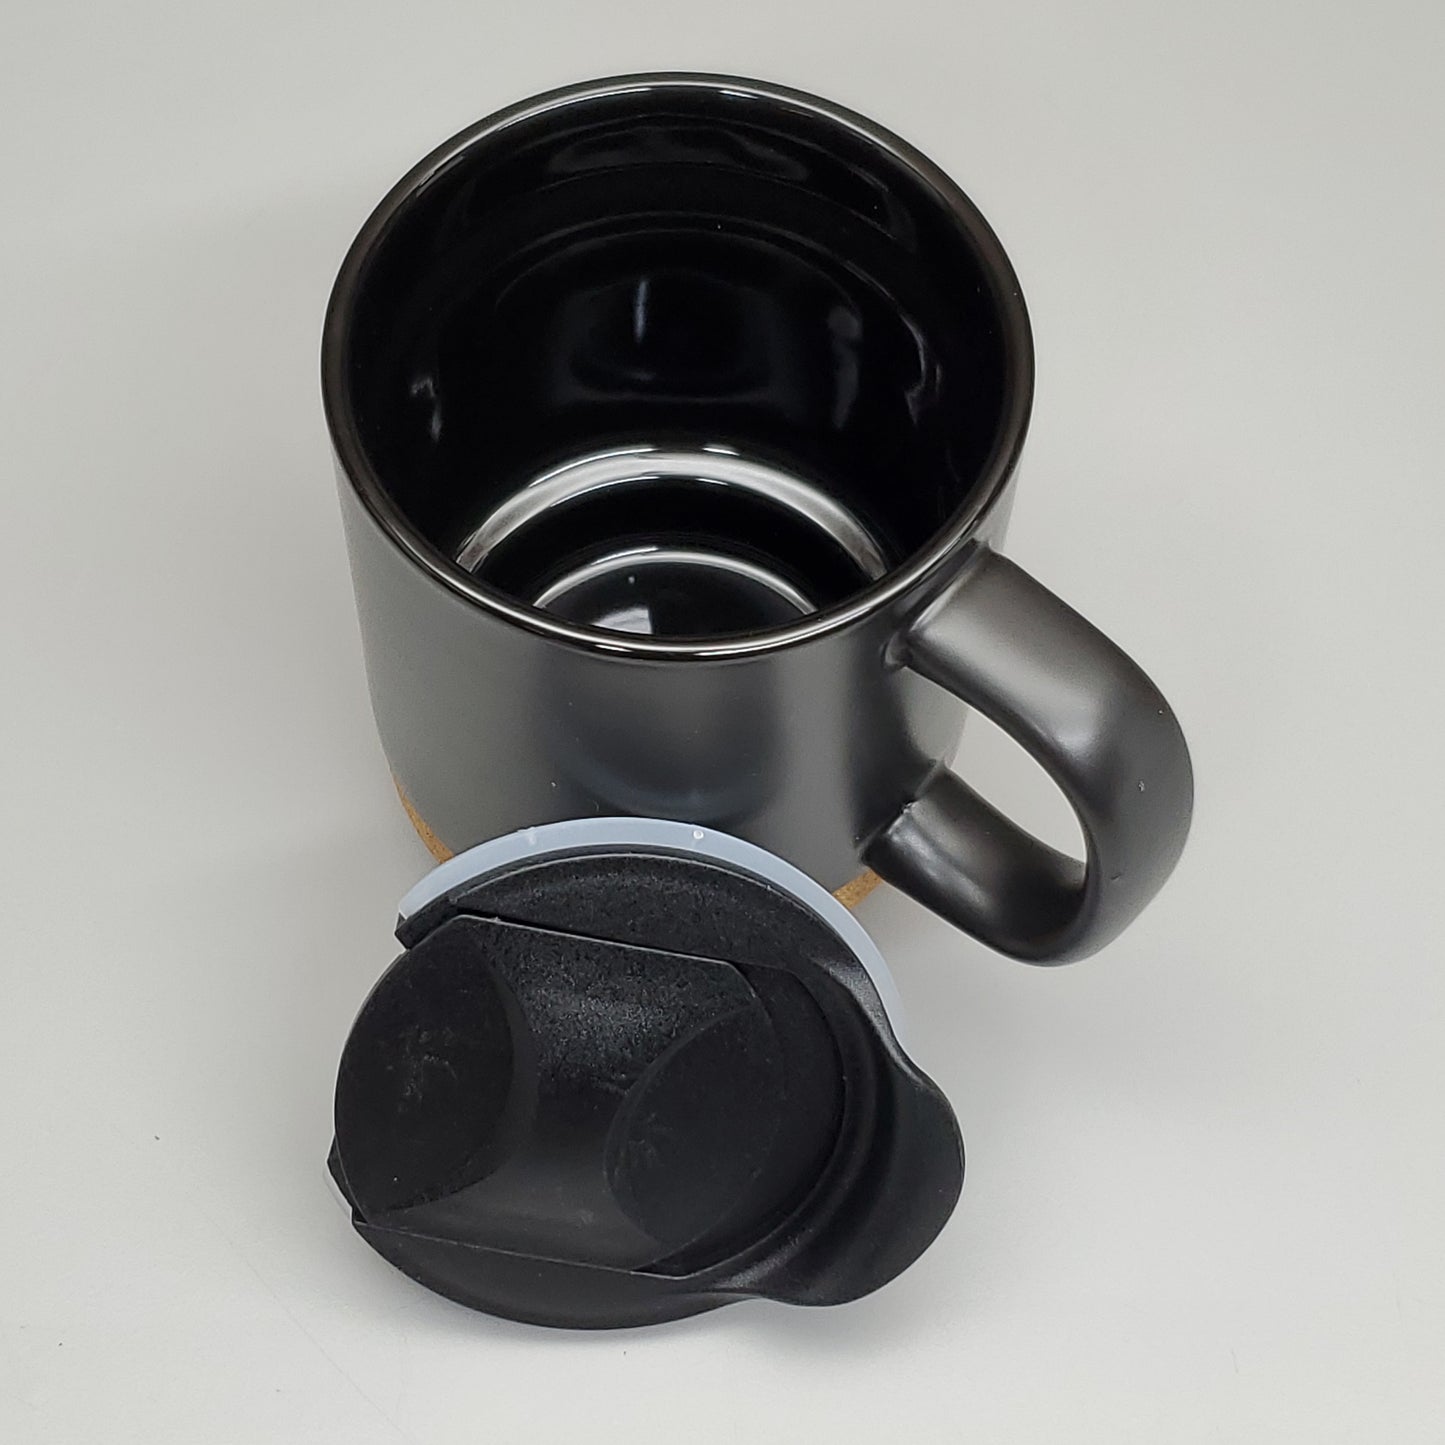 12 Pack of Cork Base Ceramic Mugs with Lids Blank Black AC566-00